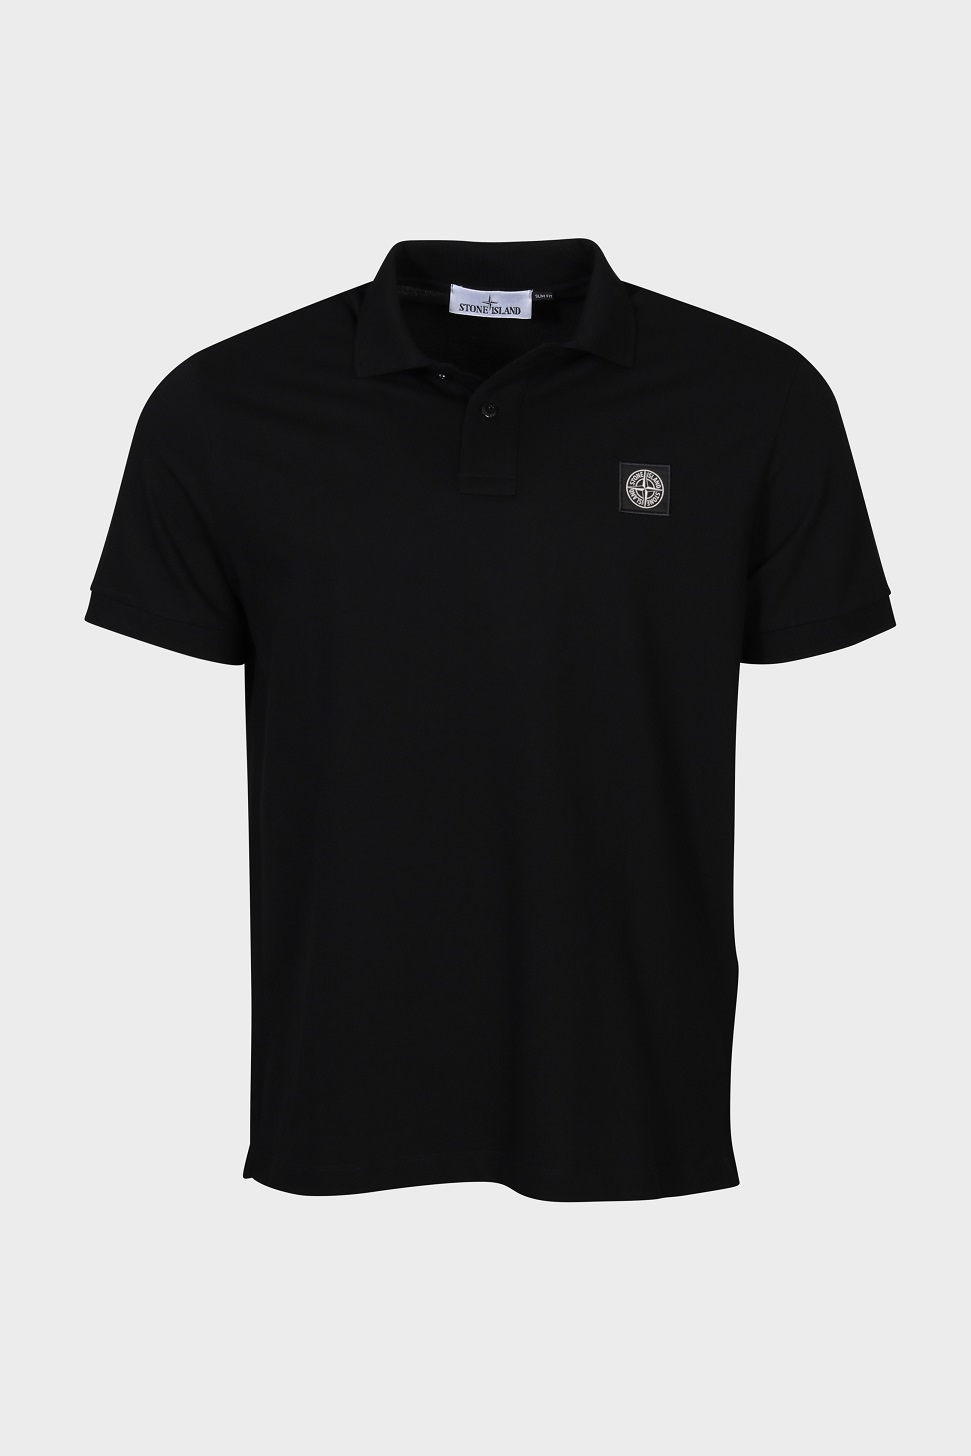 STONE ISLAND Slim Fit Polo Shirt in Black